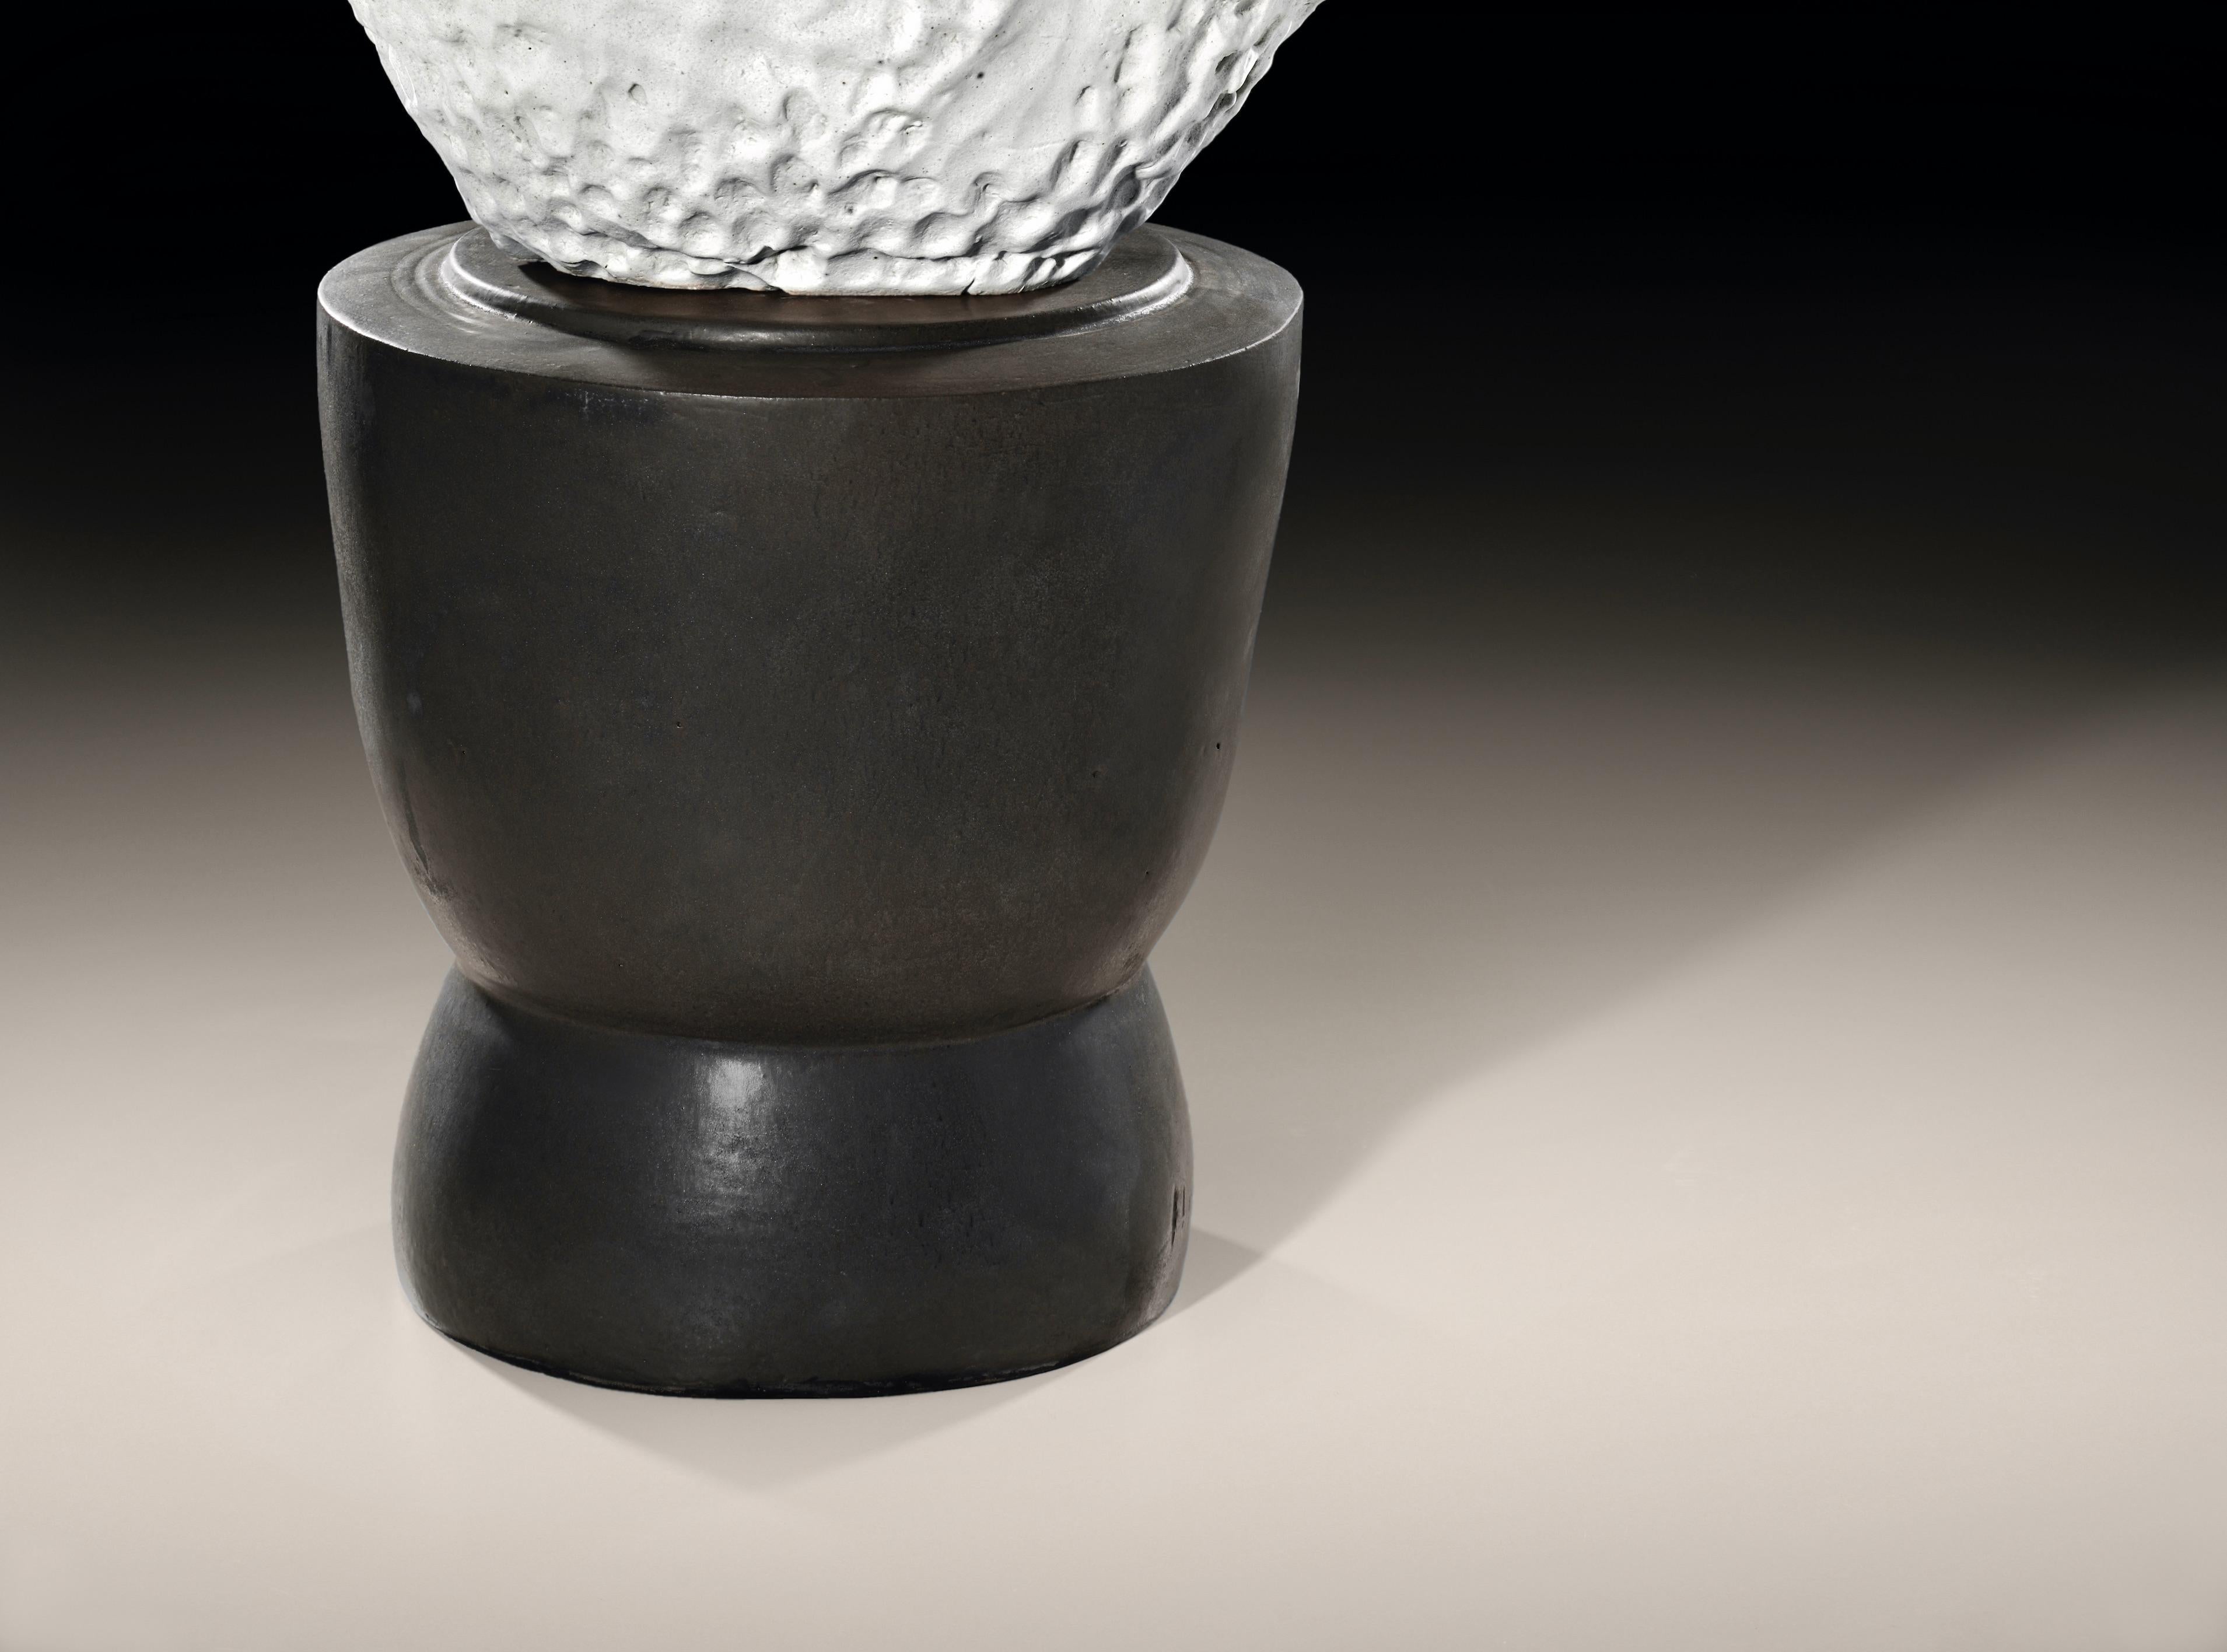 Contemporary Richard Hirsch Ceramic Altar Bowl with Blown Glass Ladle Sculpture #3, 2020 For Sale